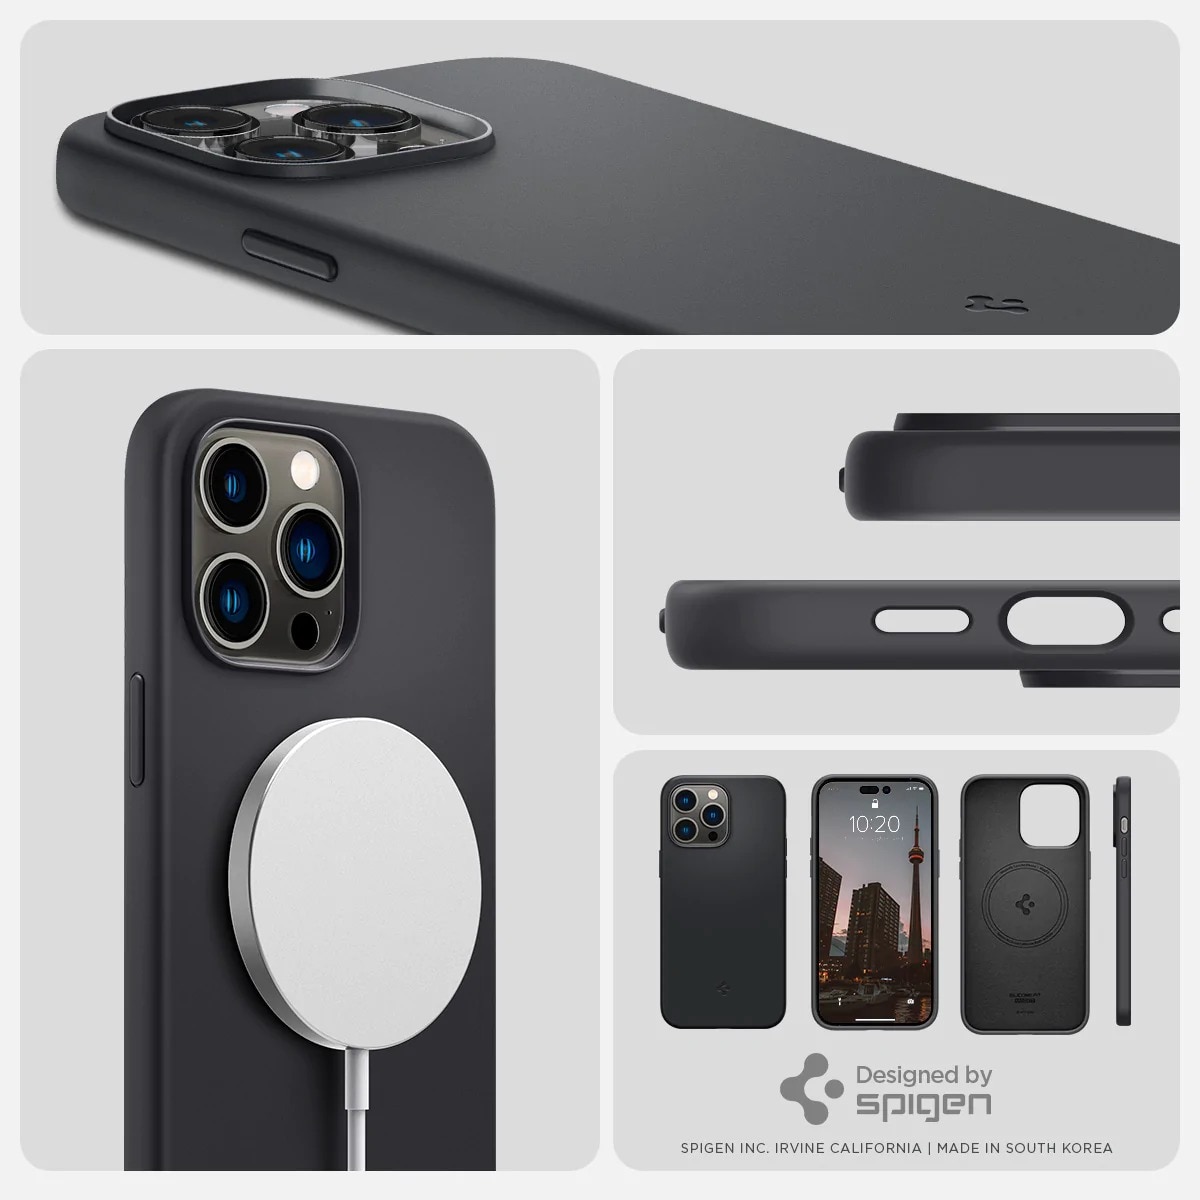 Coque Silicone Fit Mag iPhone 14 Pro Max Black